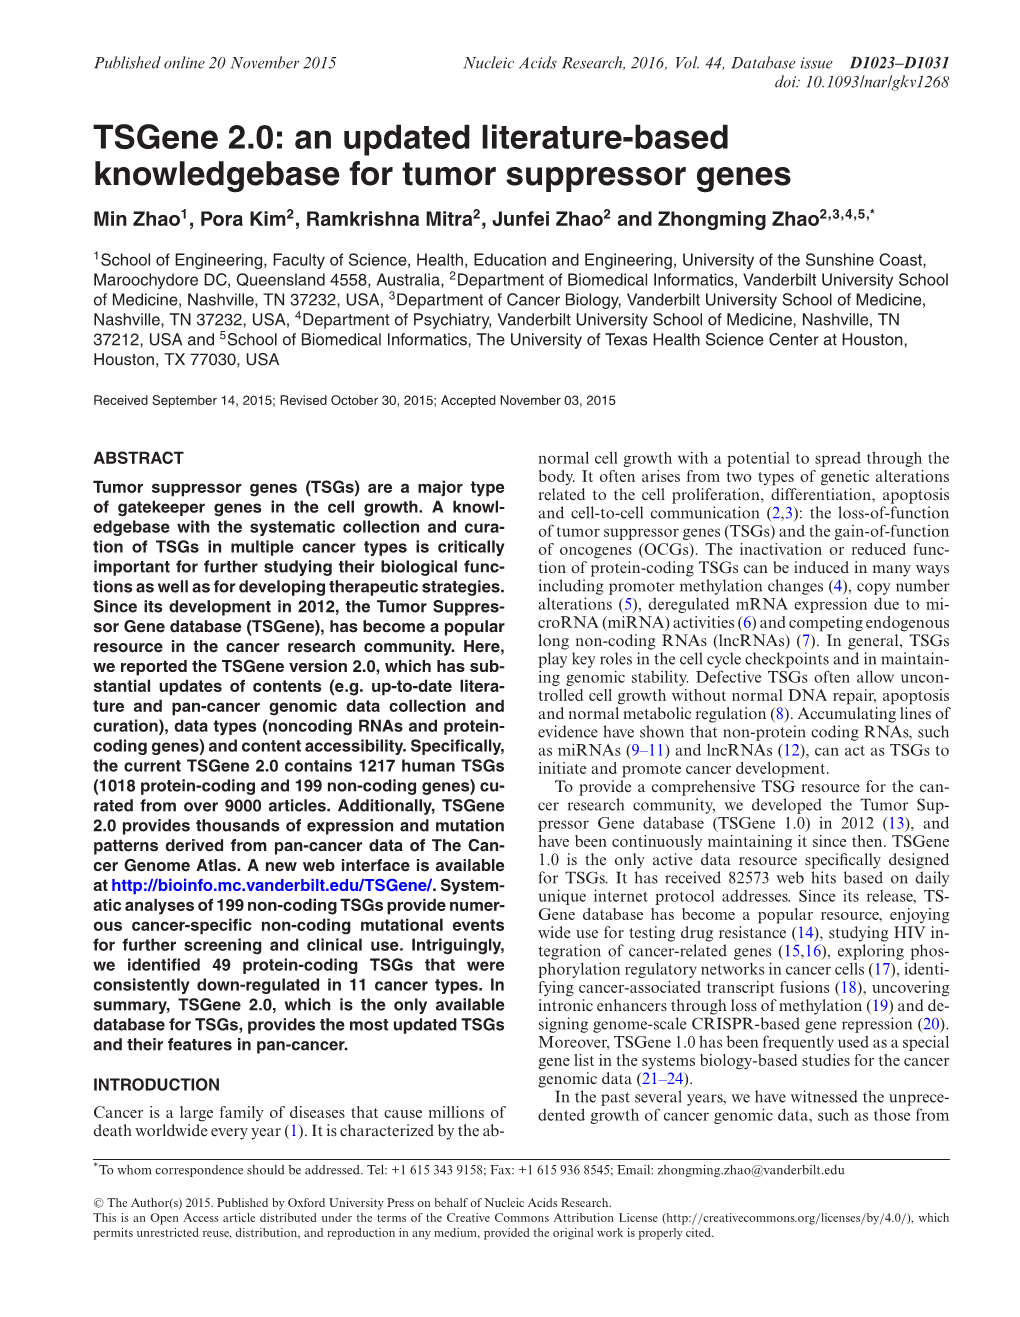 Tsgene 2.0: an Updated Literature-Based Knowledgebase for Tumor Suppressor Genes Min Zhao1,Porakim2, Ramkrishna Mitra2, Junfei Zhao2 and Zhongming Zhao2,3,4,5,*